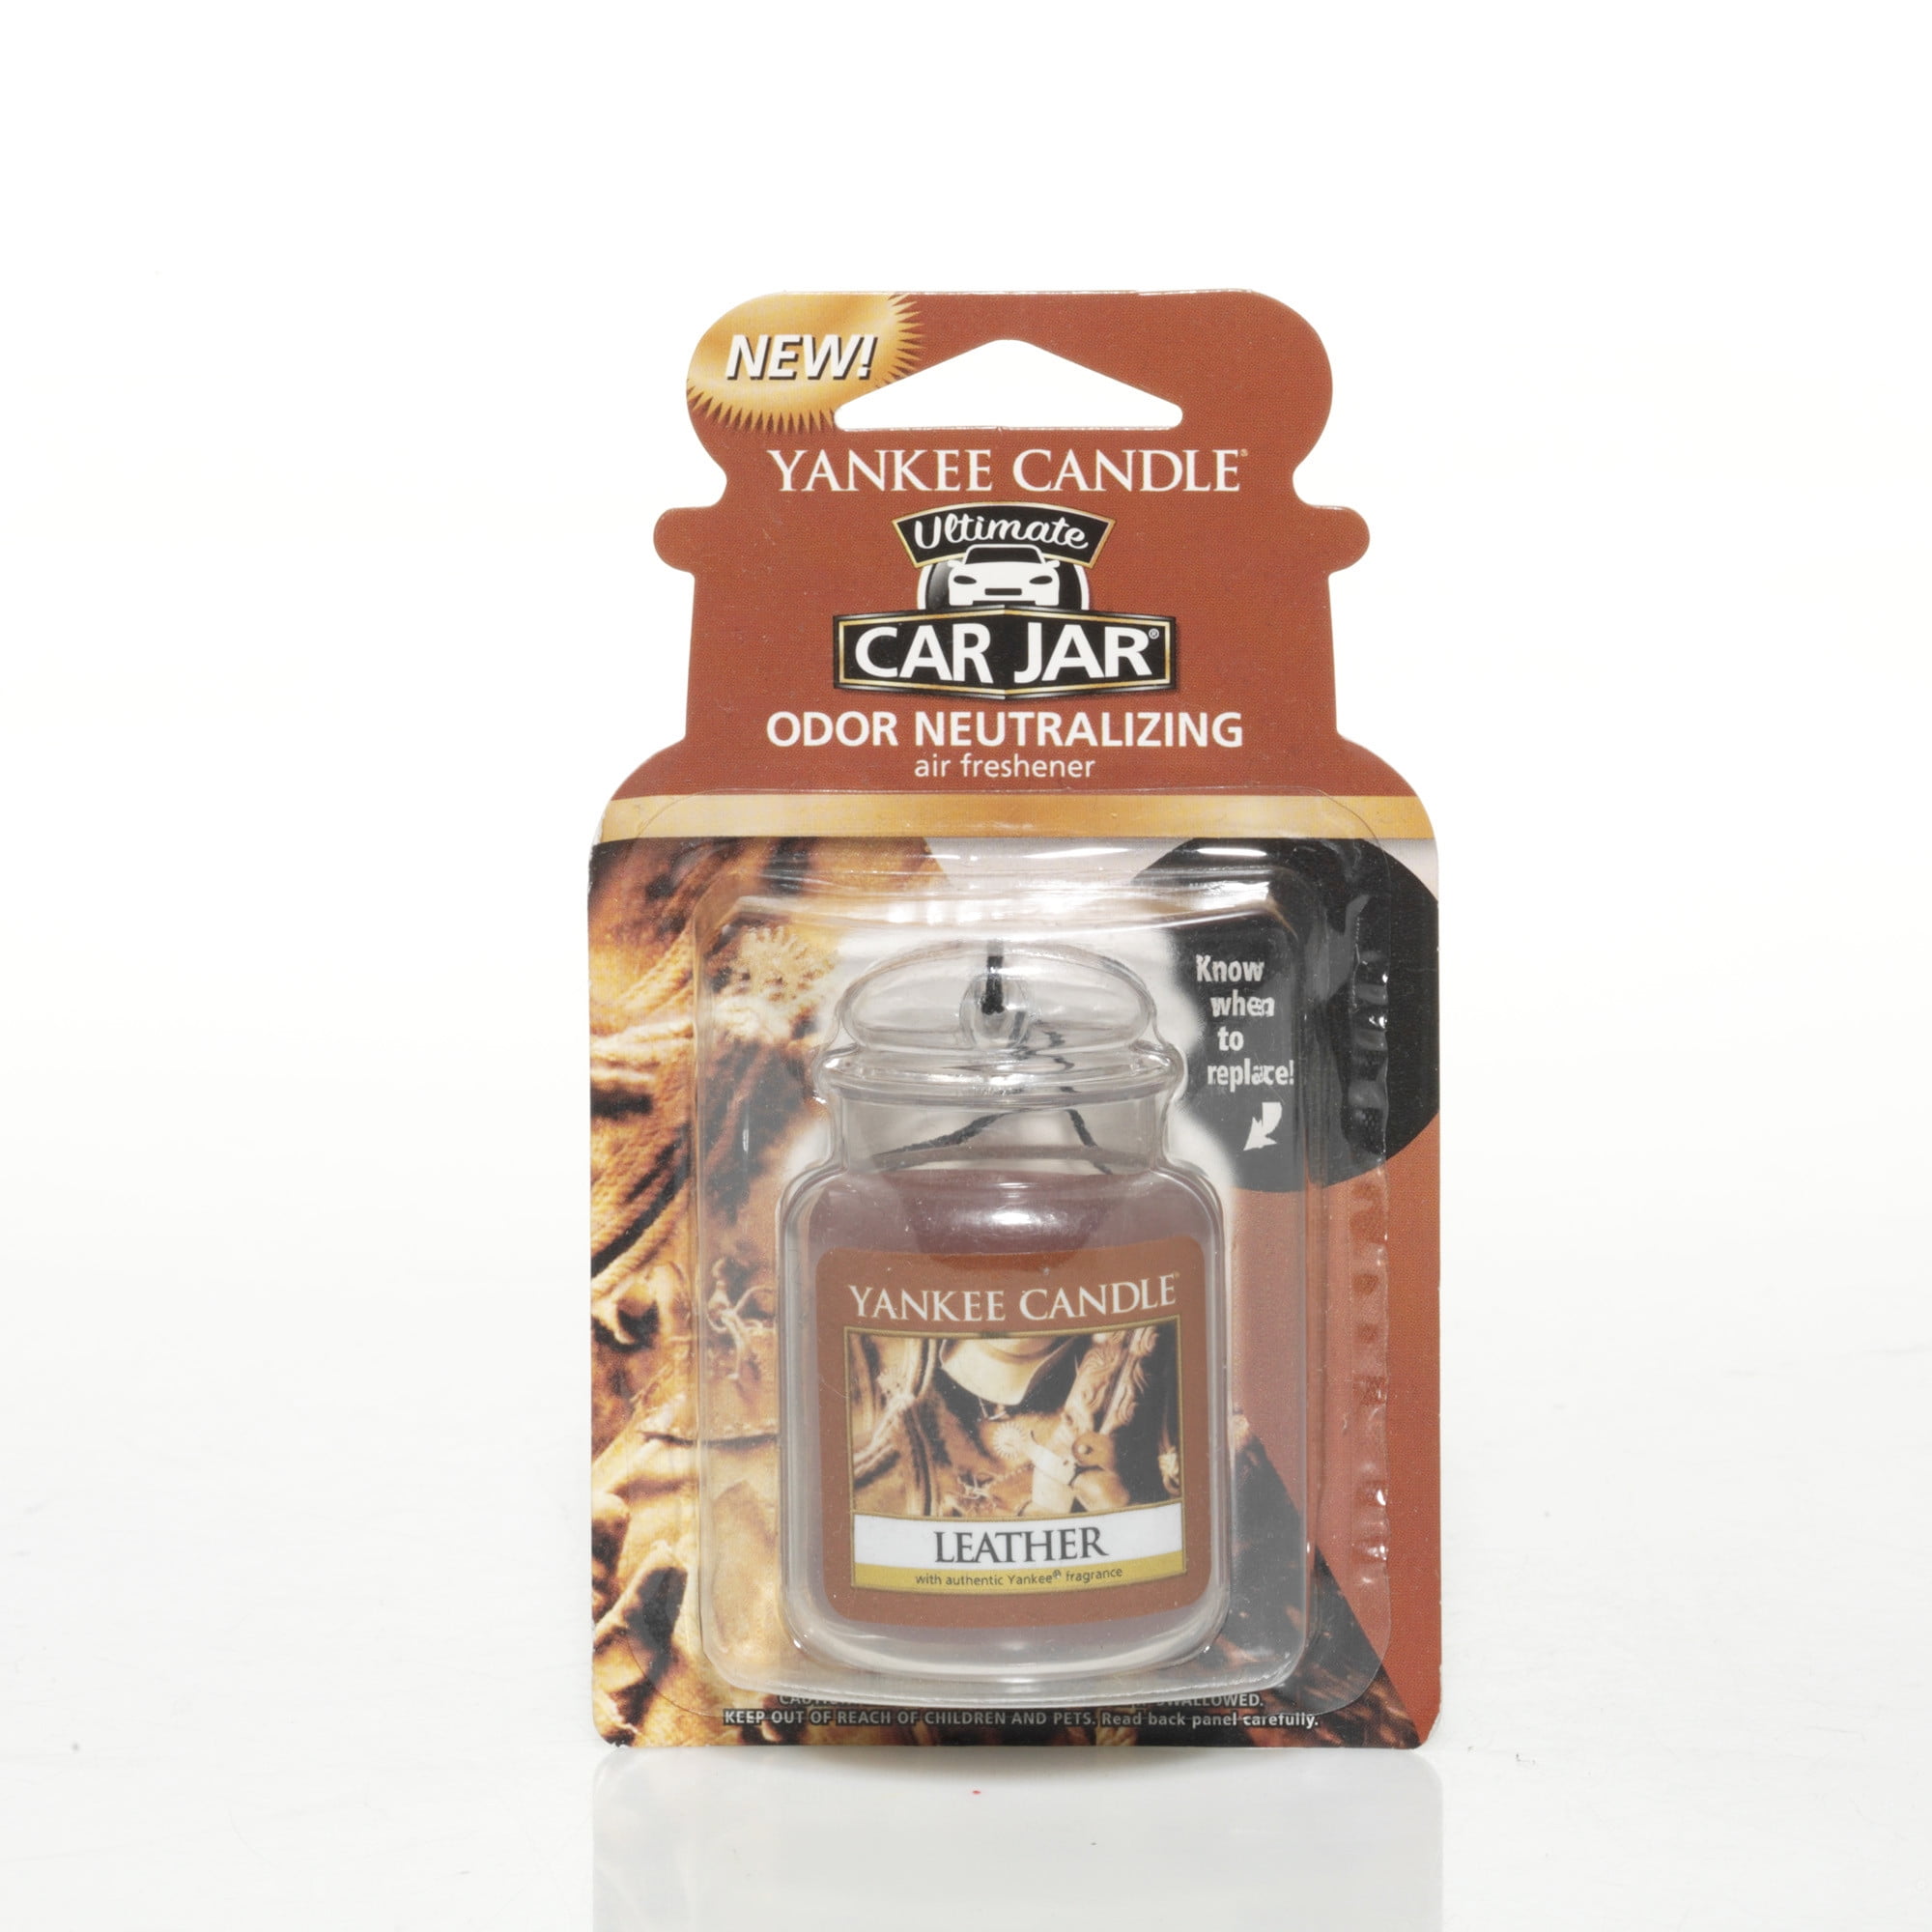 Yankee Candle Car Jar Ultimate Hanging Air Freshener - Autumn